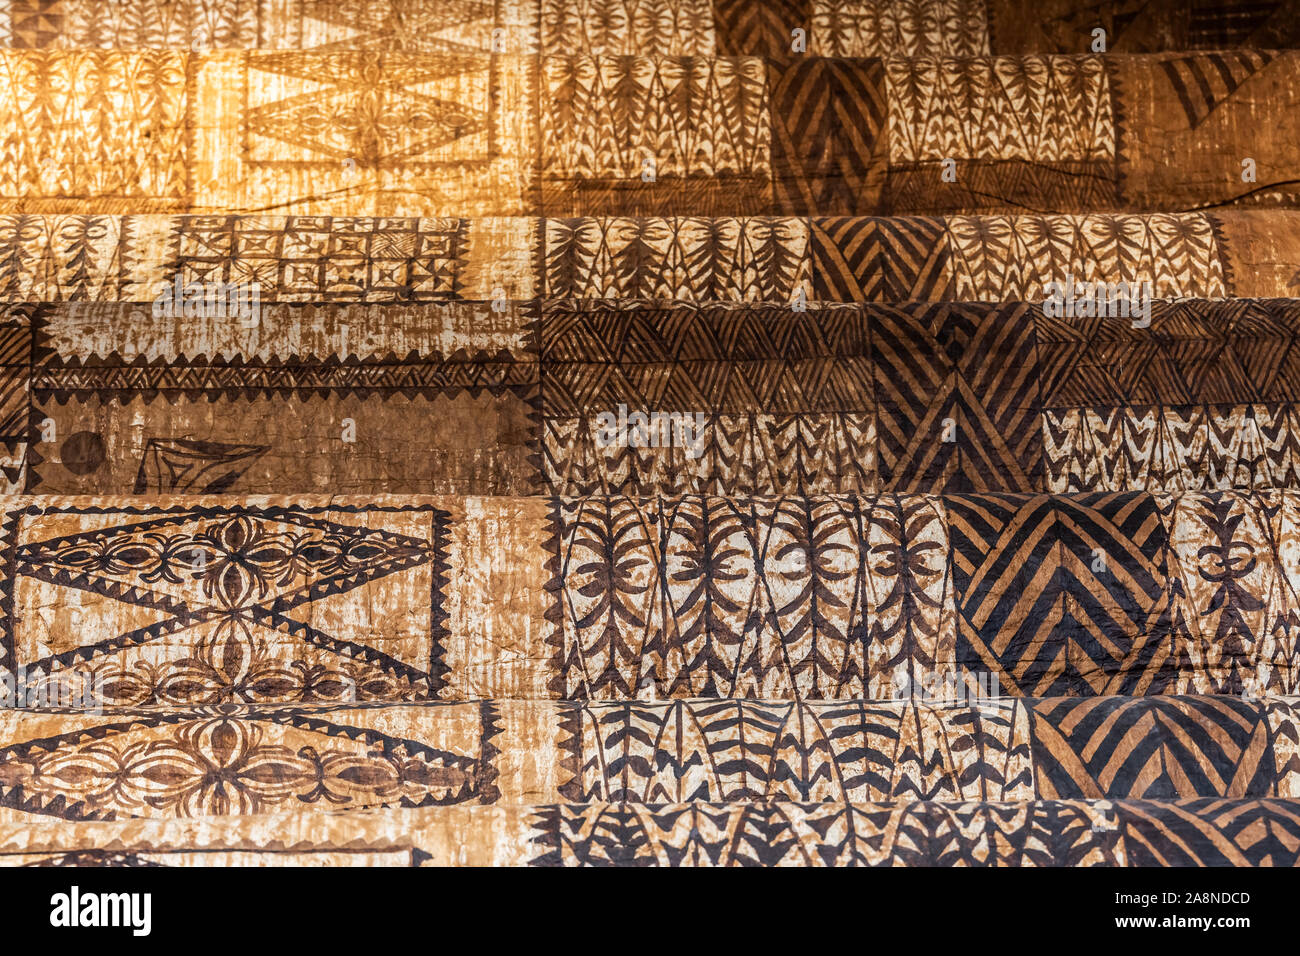 Huge bark cloth launima patterns detail from Tonga, Polynesia. Fabrics exhibited at Basel Museum of Cultures, Switzerland. Stock Photo